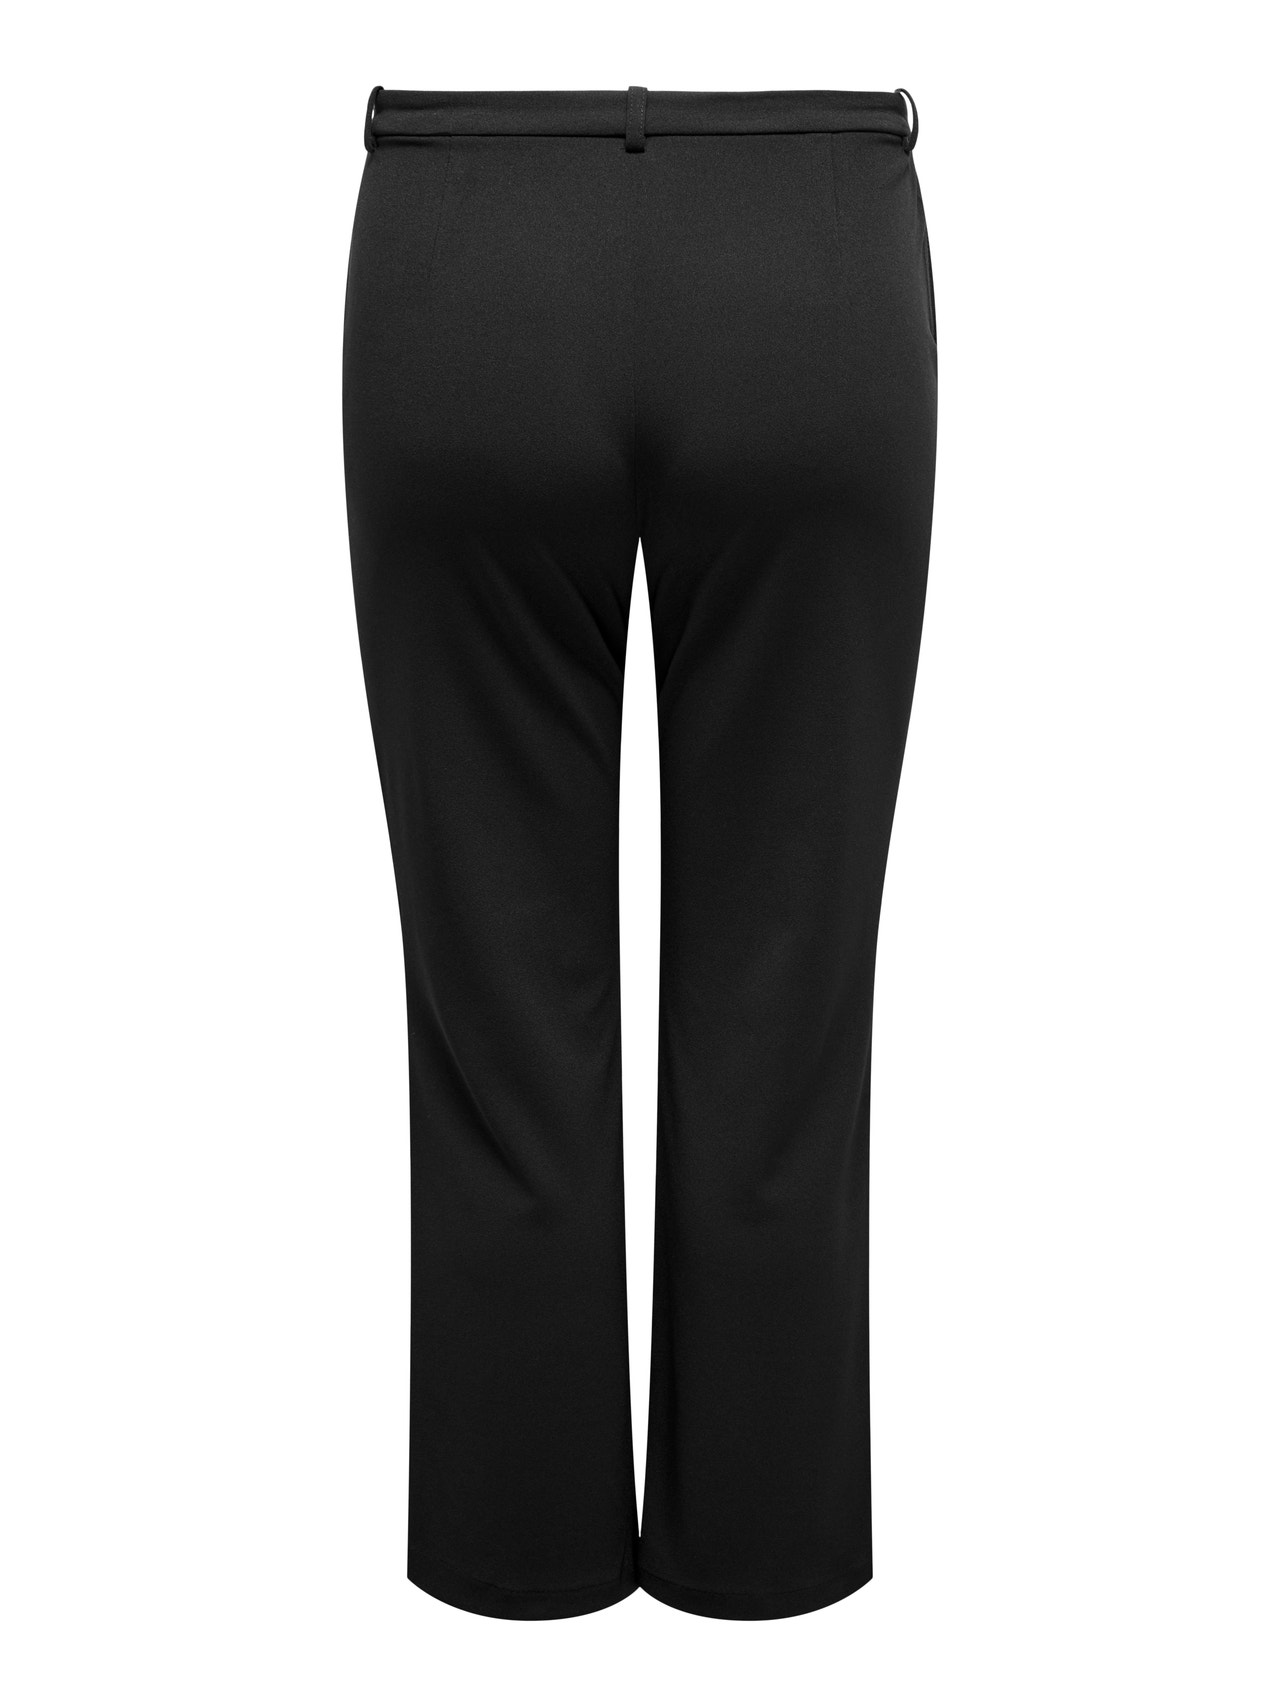 ONLY Curvy classic pants -Black - 15312245